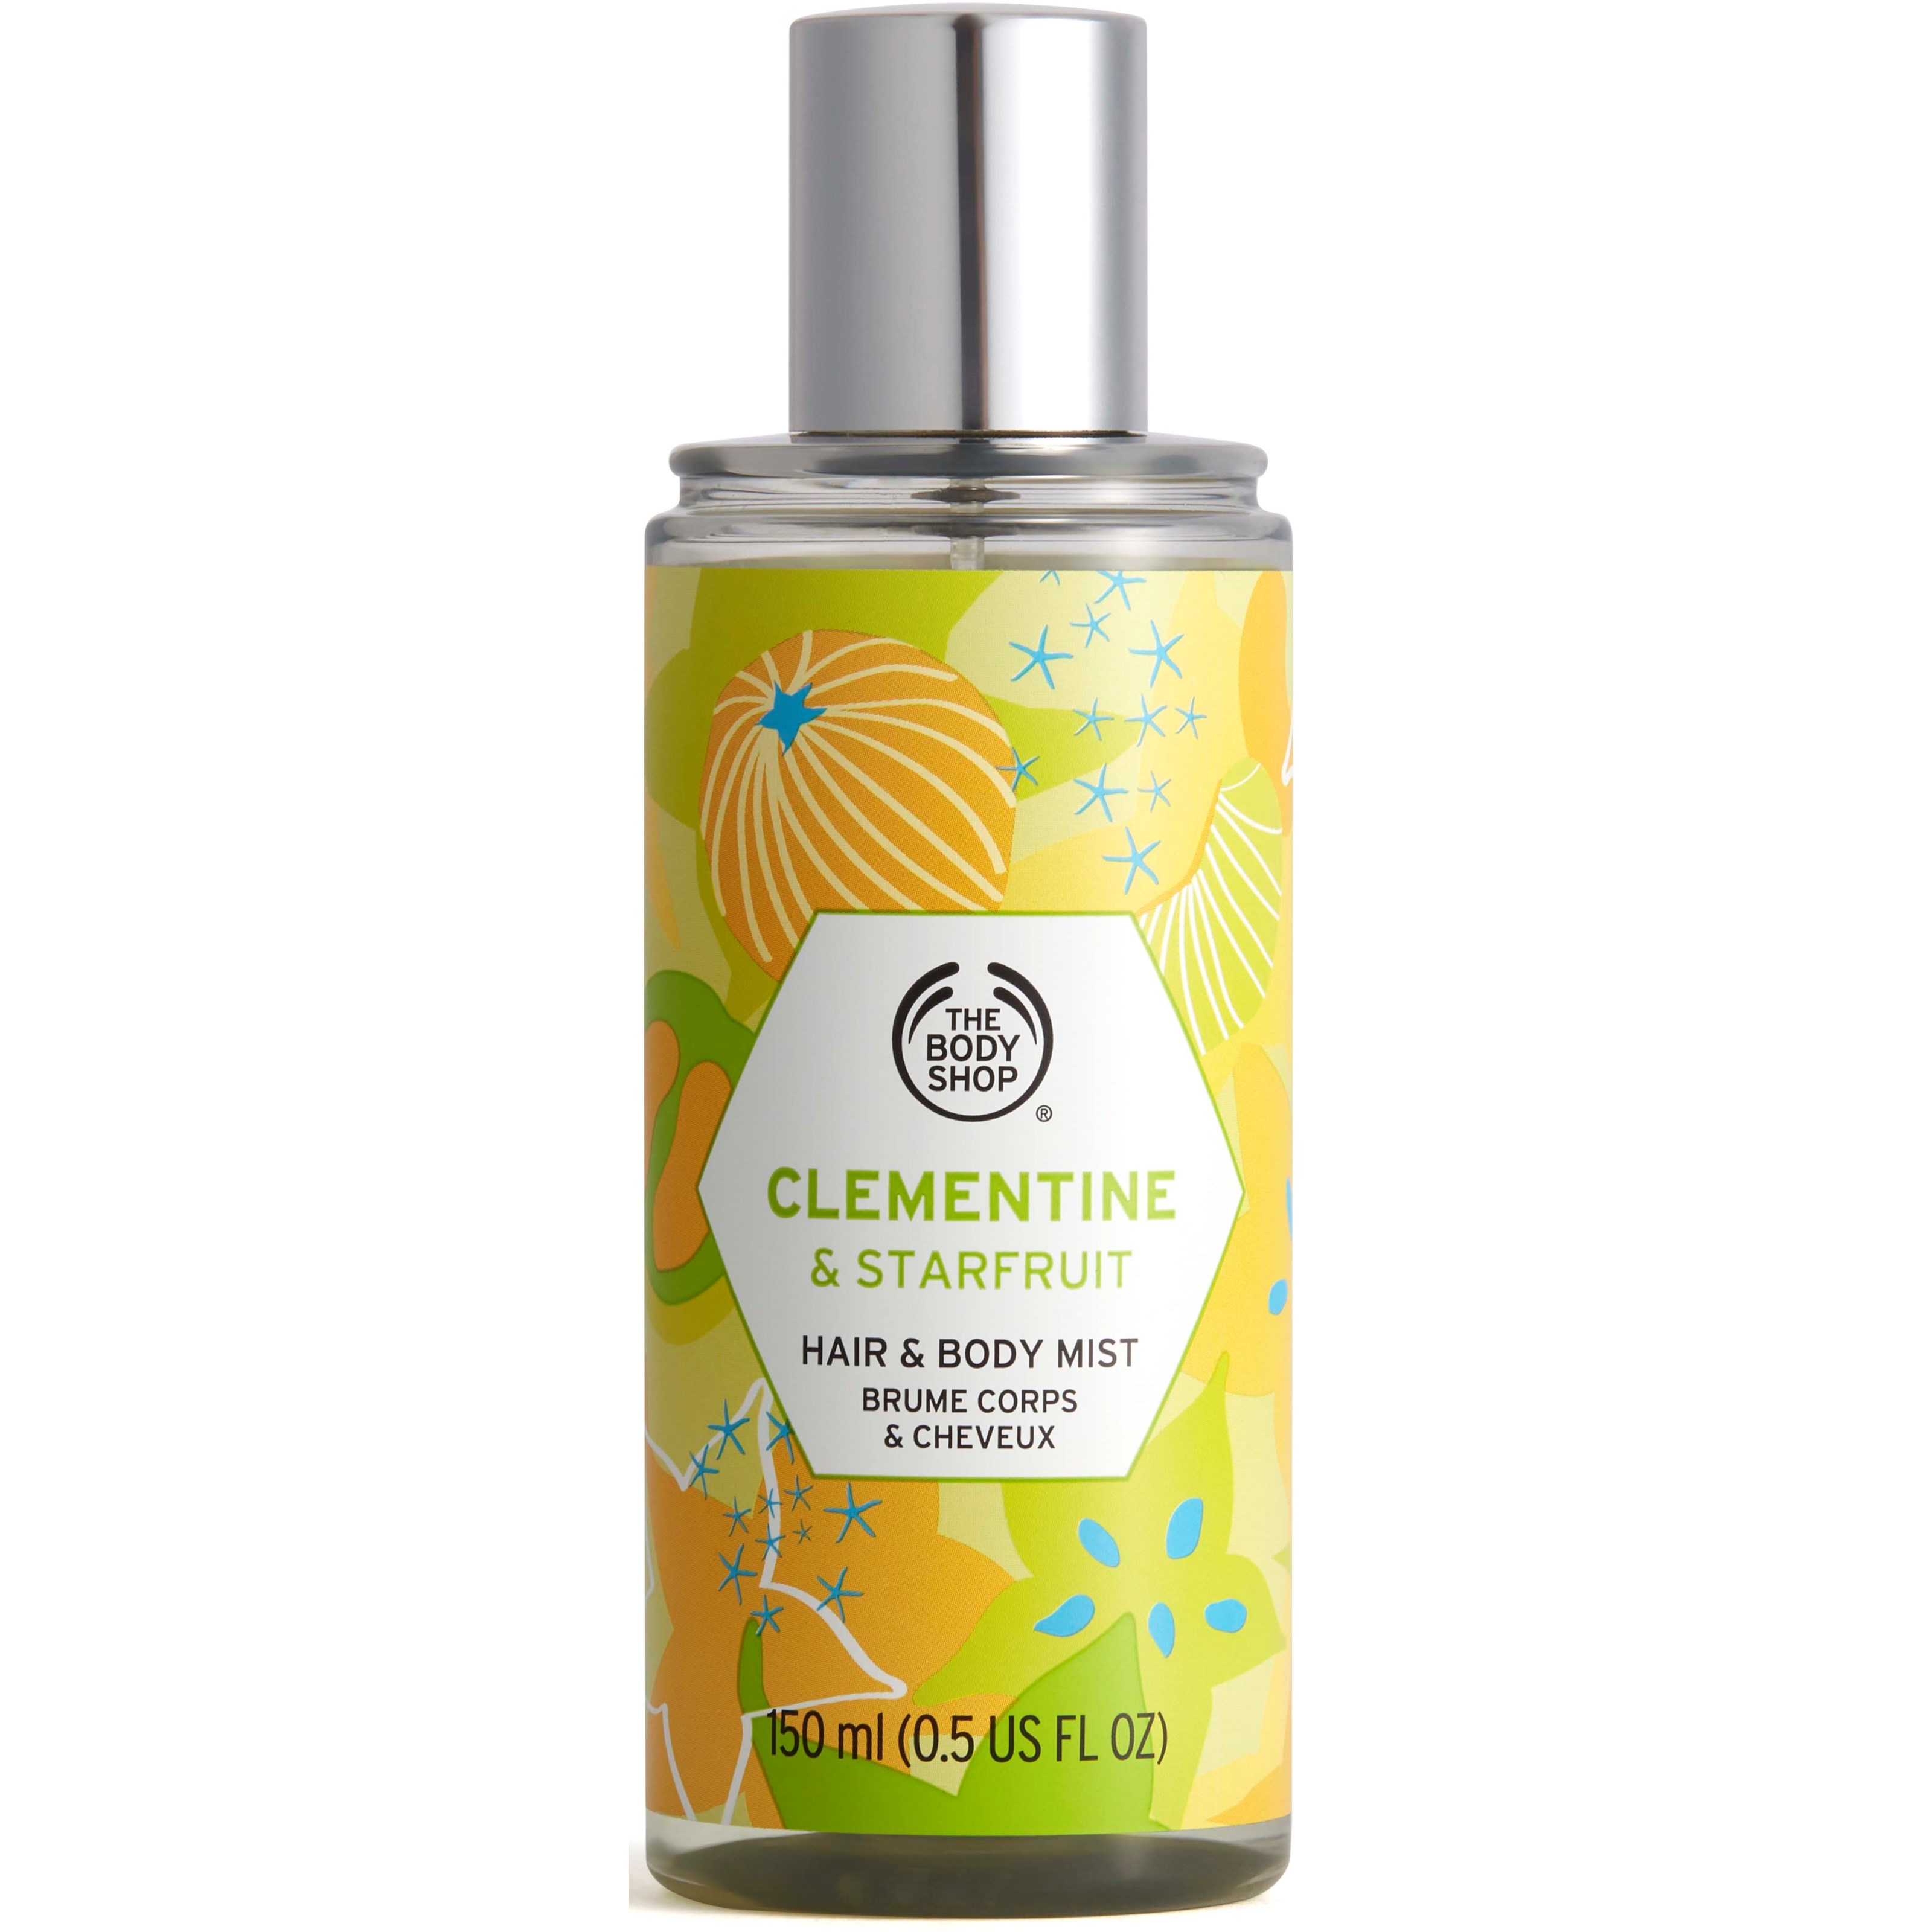 The Body Shop Clementine & Starfruit Hair & Body Mist 150 ml